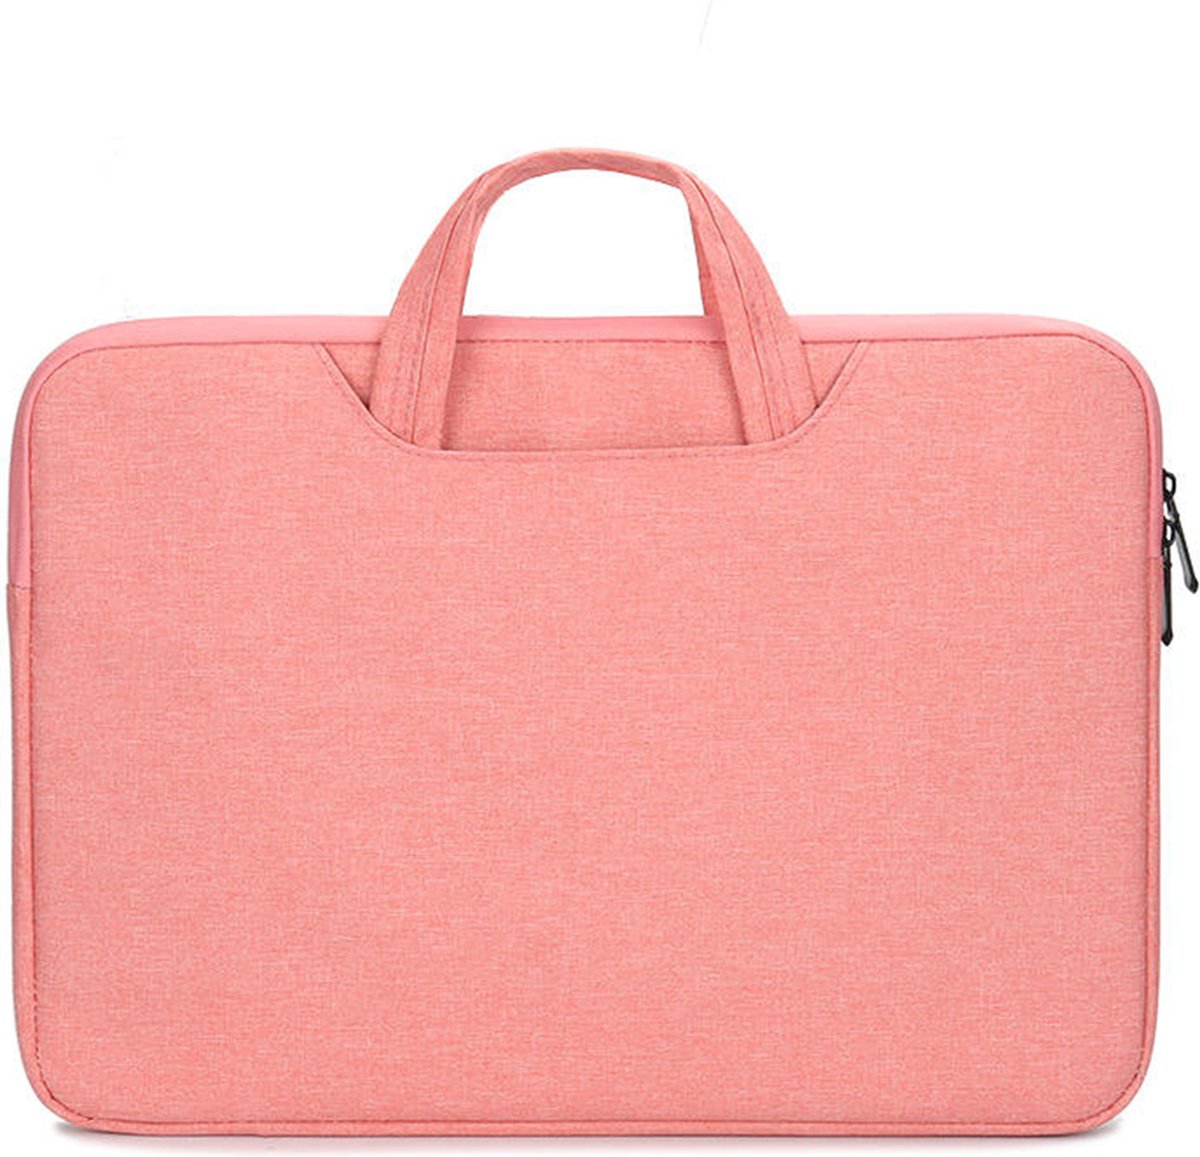 Case2go - Laptophoes 13 inch - Laptop Sleeve - Roze